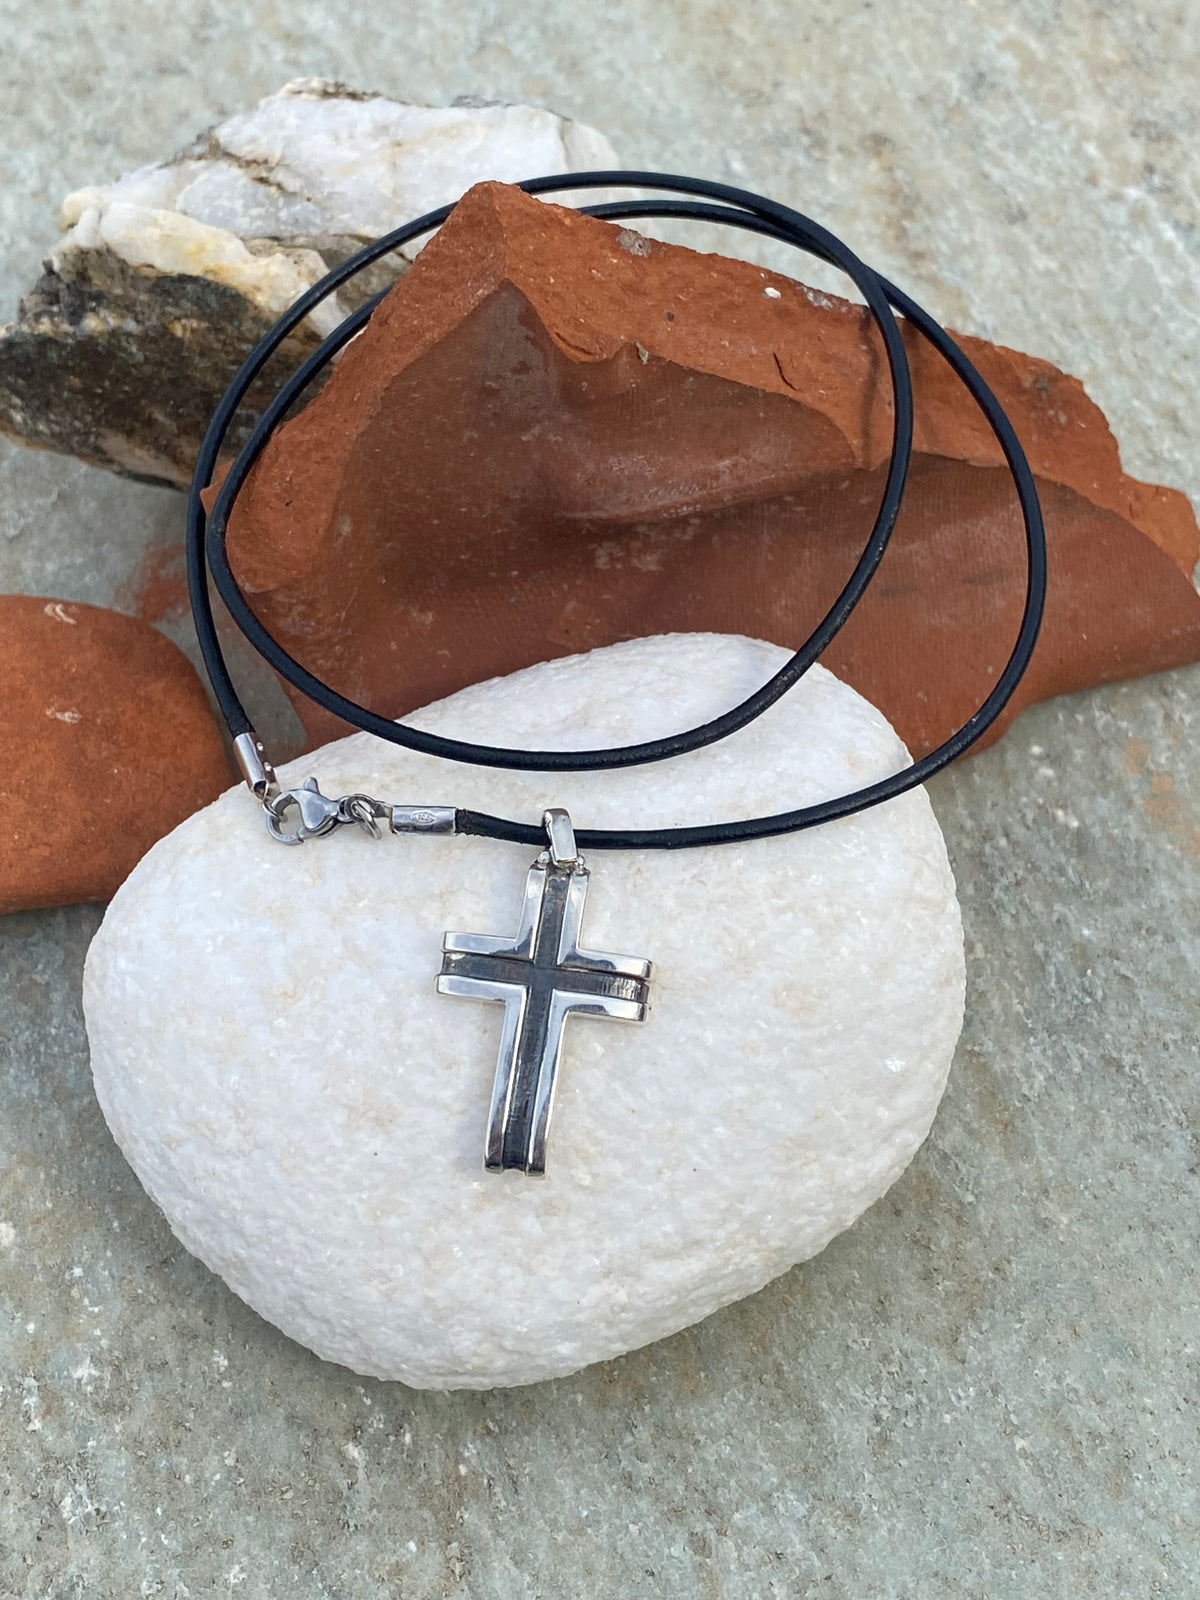 Men’s cross necklace, leather cord, black silver cross pendant